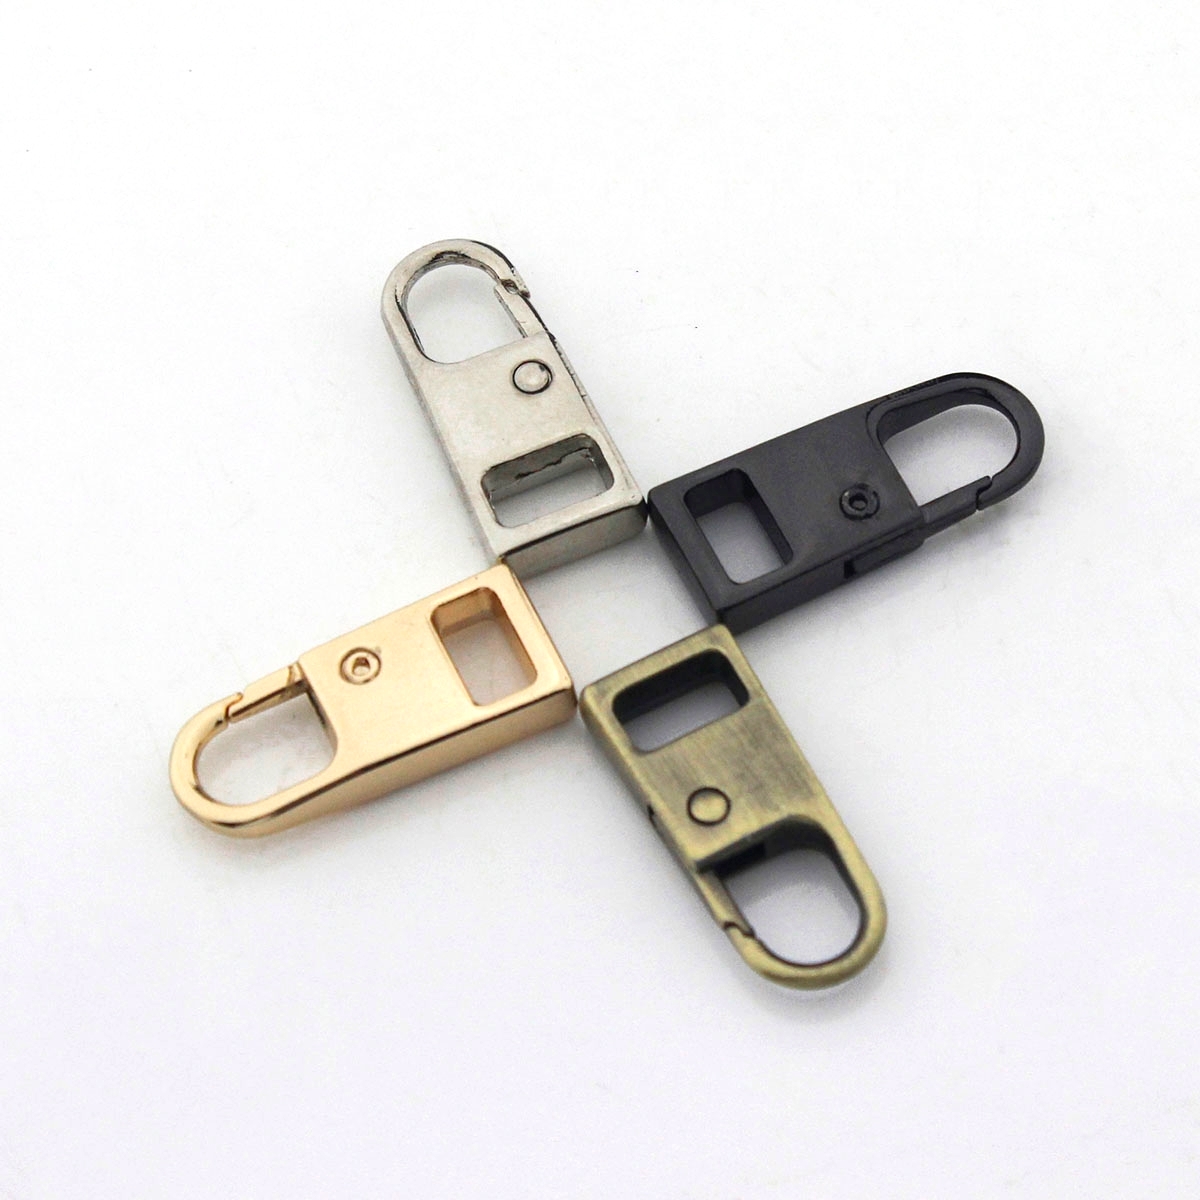 Metal Zipper Repair Kits Slider Puller Instant Zipper Replacement For Broken Buckle Travel Bag Suitcase Garment Zipper Head